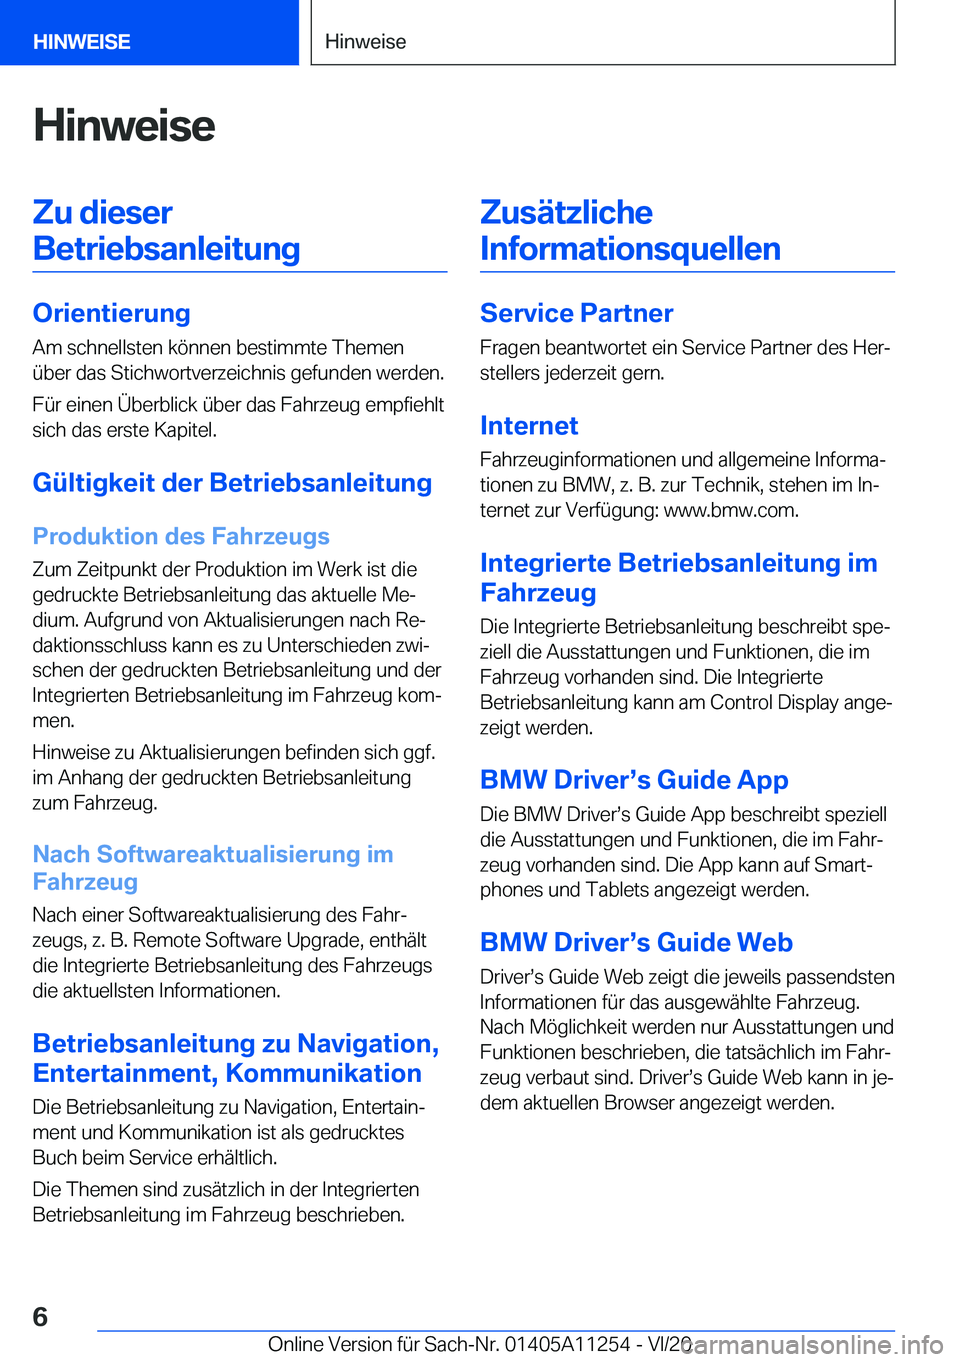 BMW 4 SERIES COUPE 2021  Betriebsanleitungen (in German) �H�i�n�w�e�i�s�e�Z�u��d�i�e�s�e�r�B�e�t�r�i�e�b�s�a�n�l�e�i�t�u�n�g
�O�r�i�e�n�t�i�e�r�u�n�g �A�m��s�c�h�n�e�l�l�s�t�e�n��k�